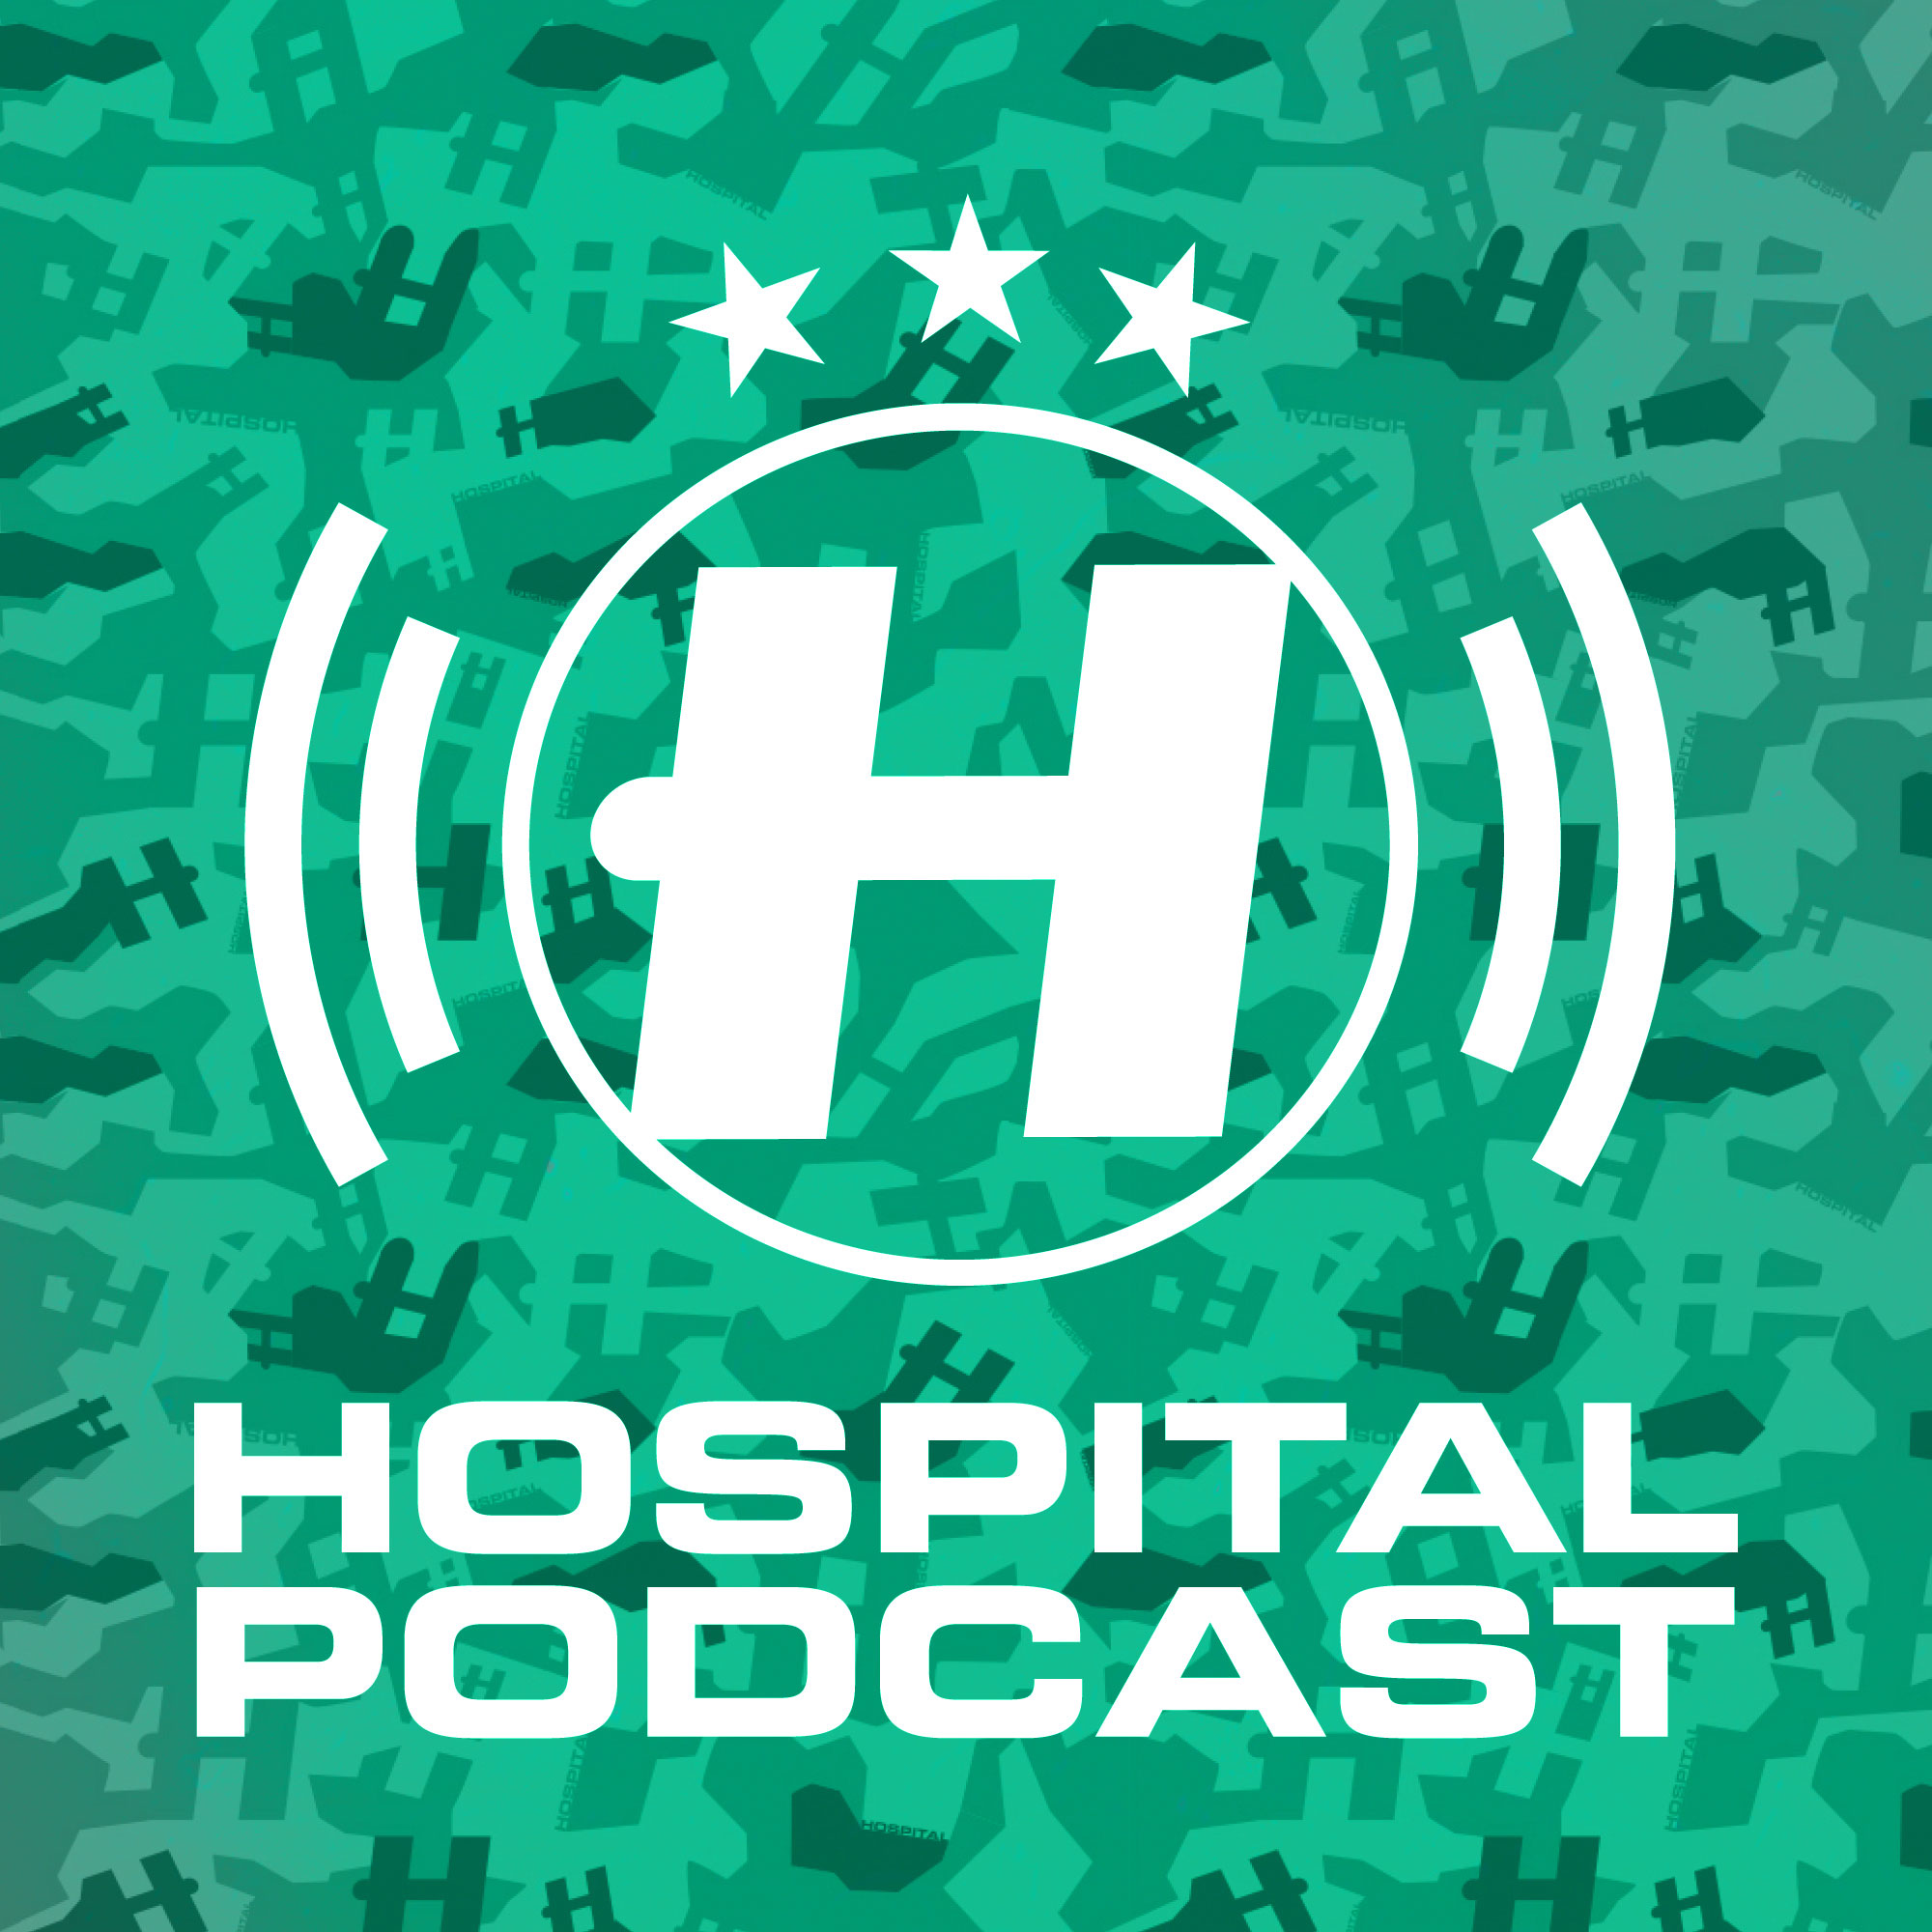 Hospital Podcast 384 with London Elektricity Artwork